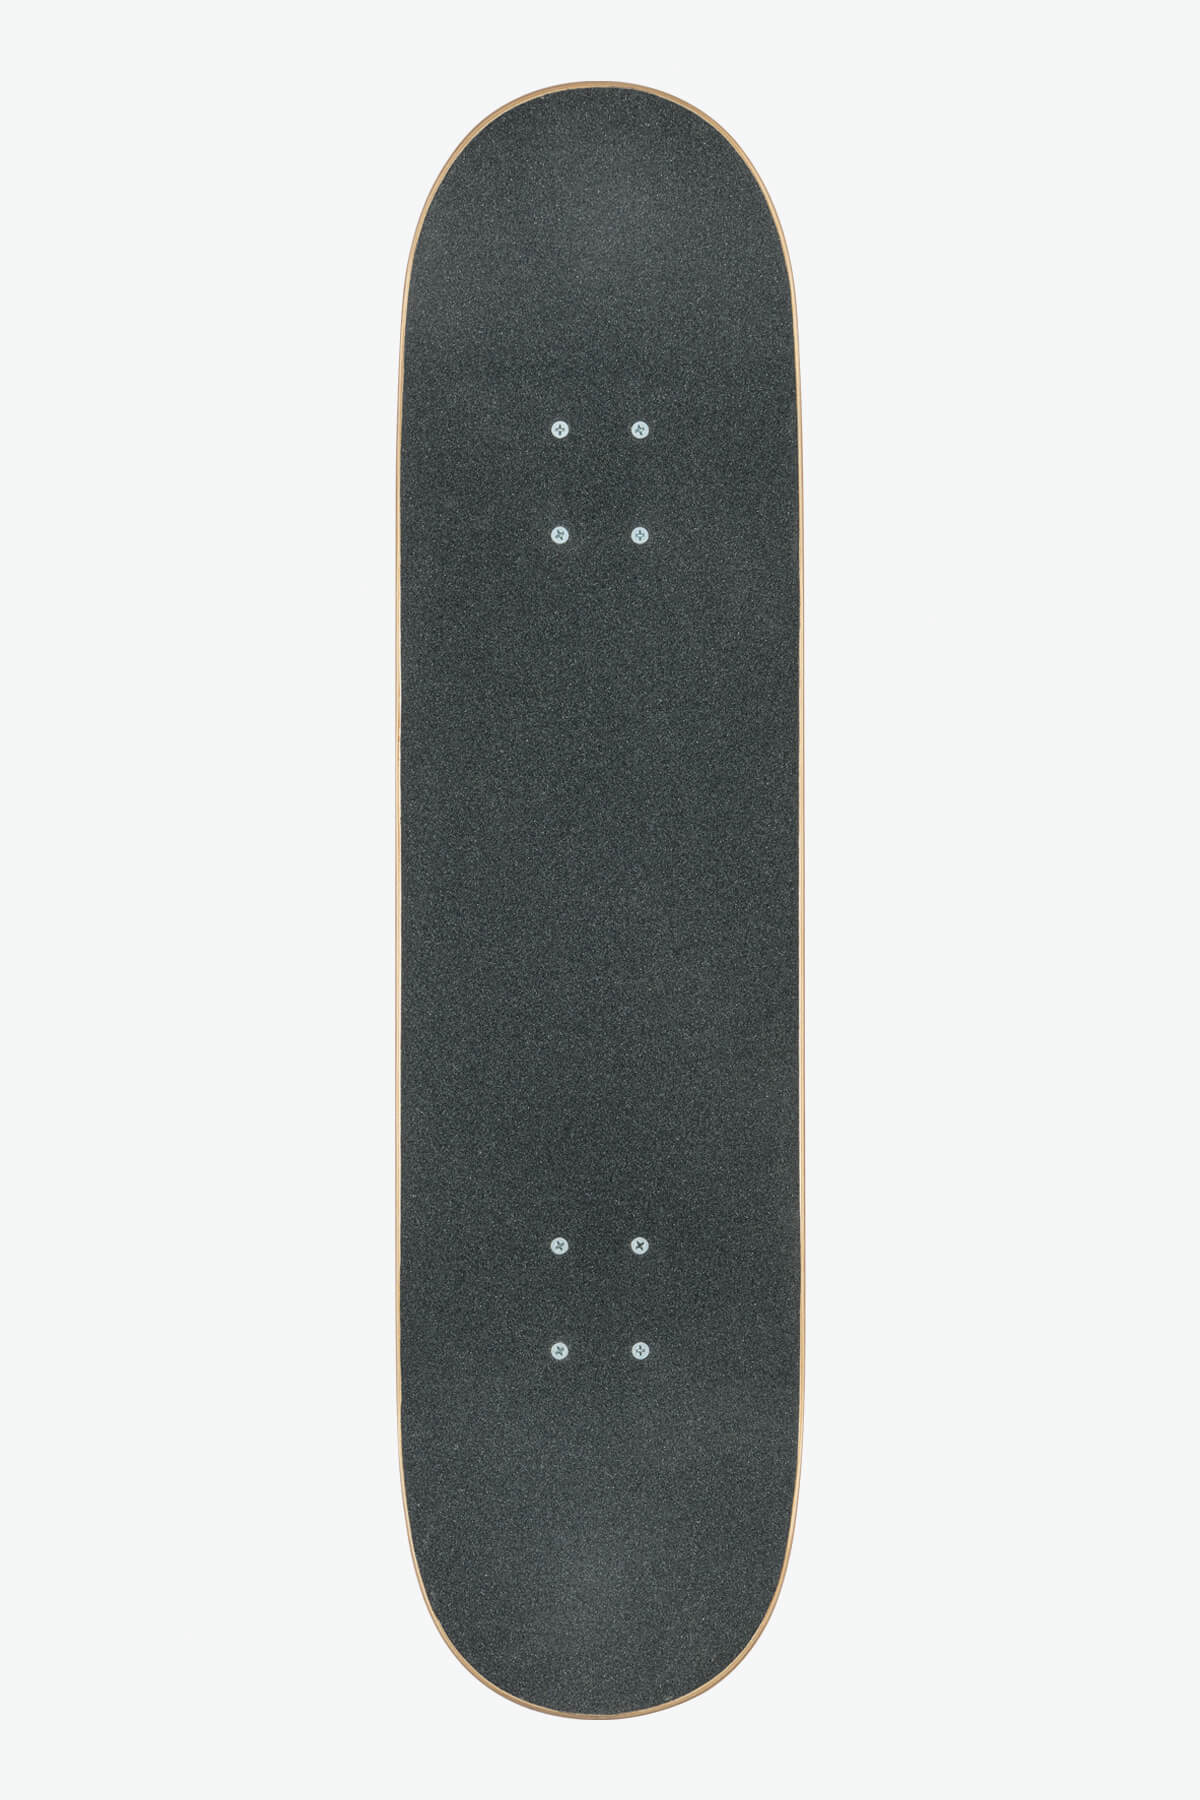 Globe - G0 Fubar - Haze/Off-White - 7.75" Komplett Skateboard